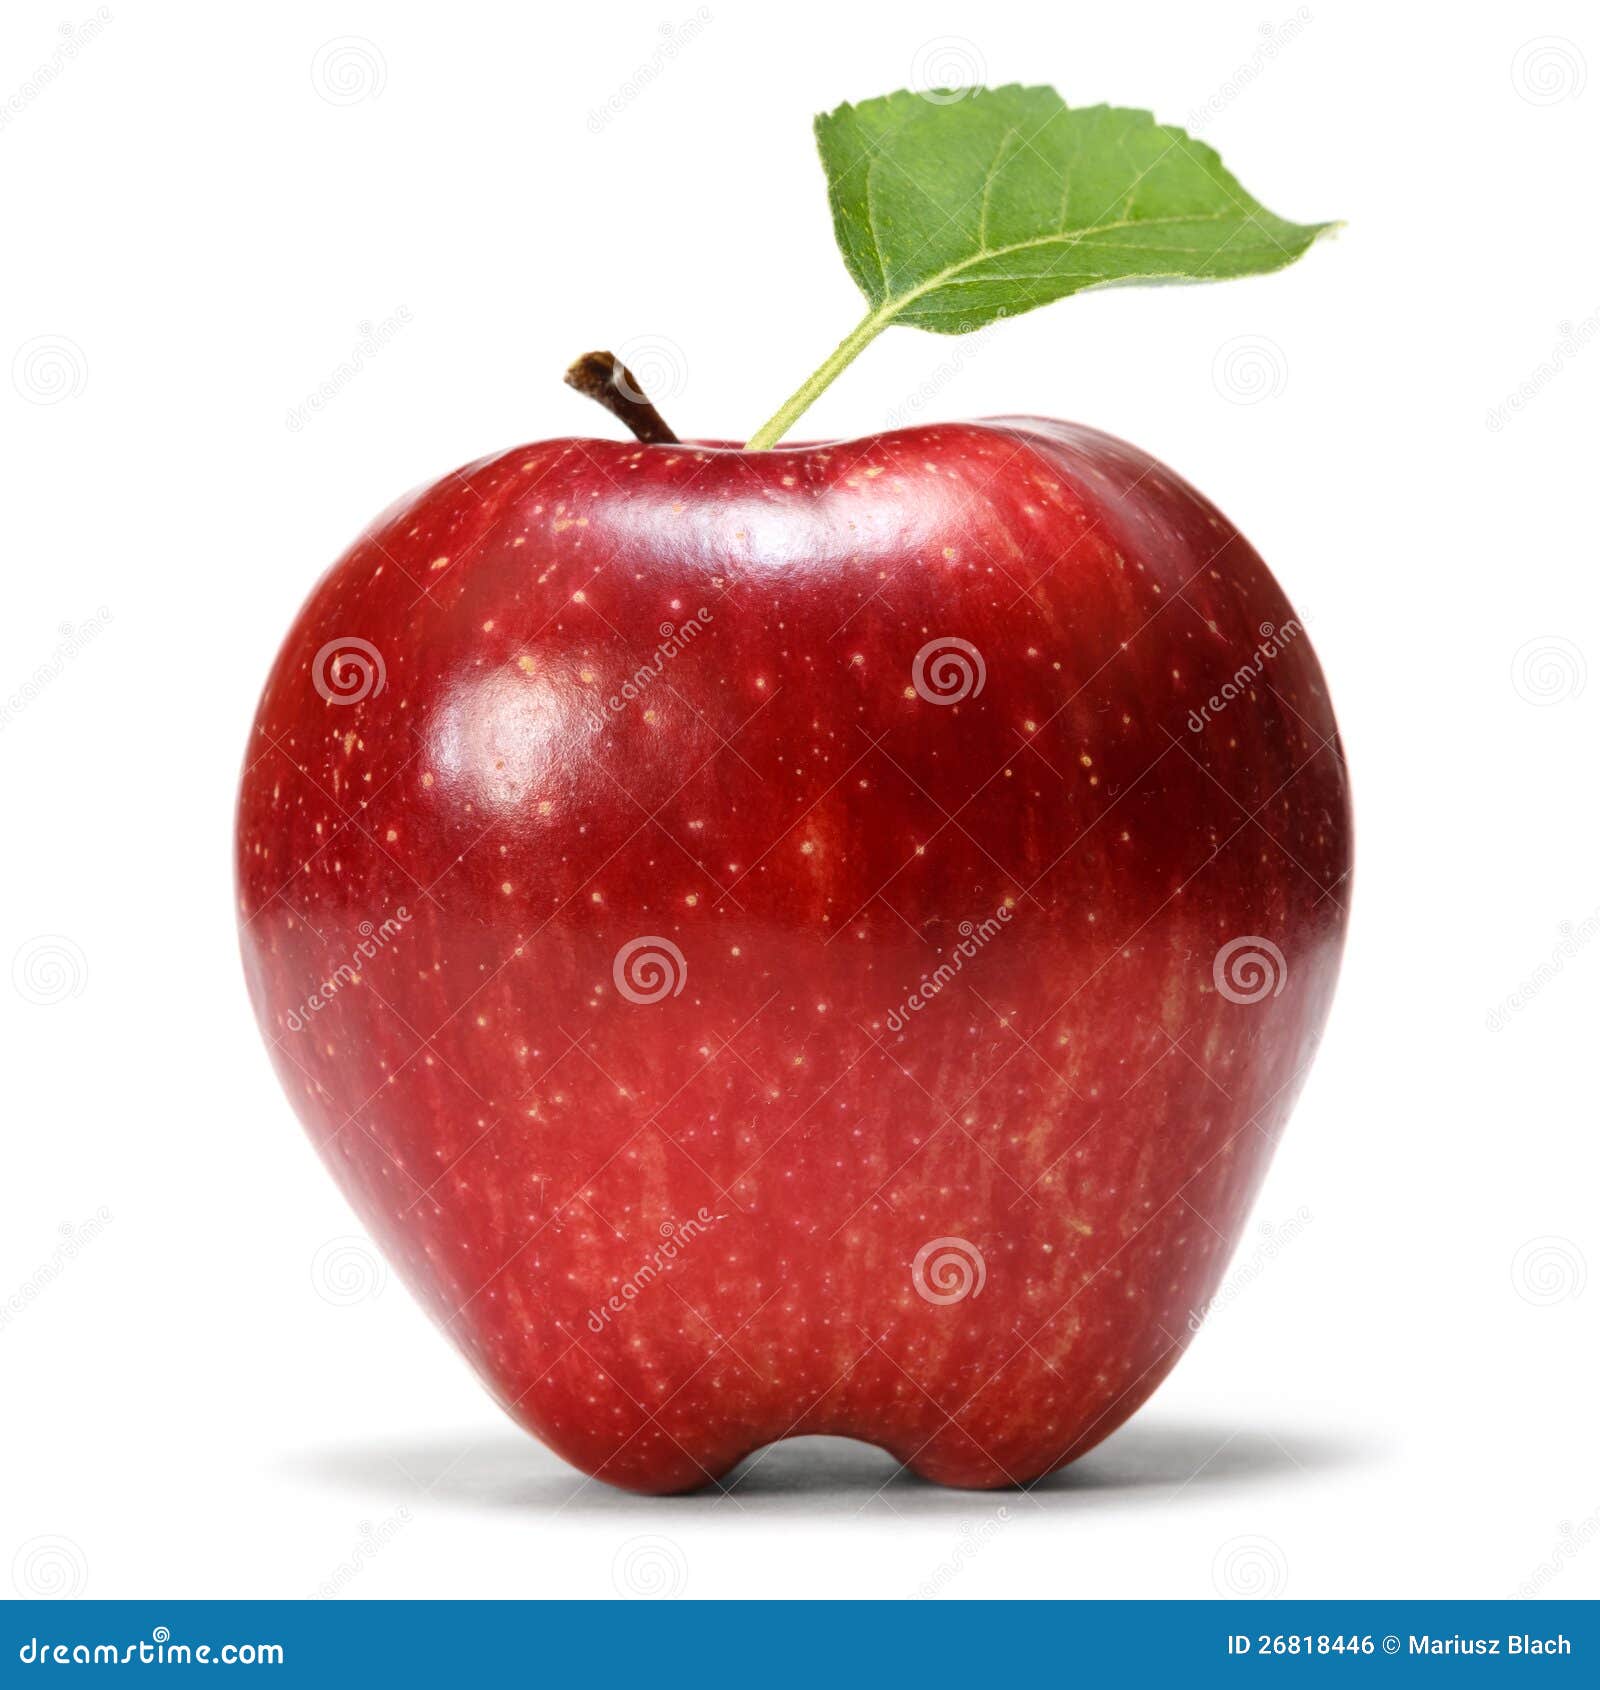 Red Organic Envy Apple Green Leaf Stock Photo 1854297859